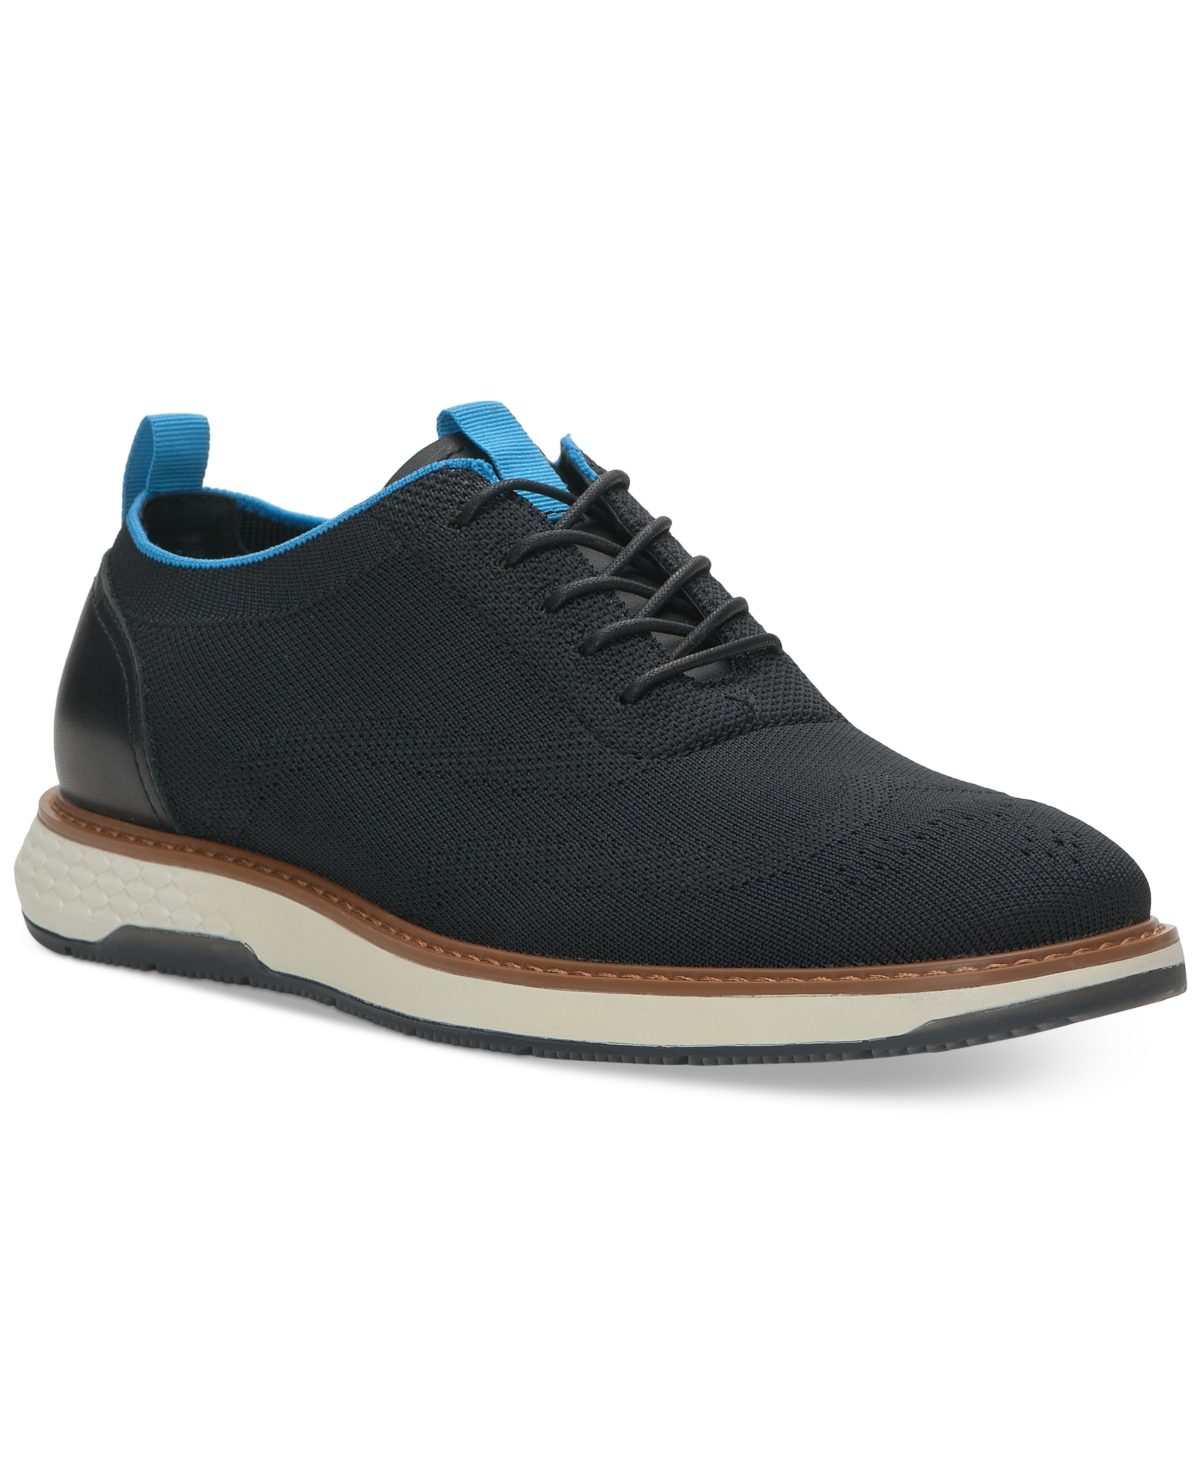 Men's Staan Lace-Up Oxford Shoes - Black / Mediterean Blue